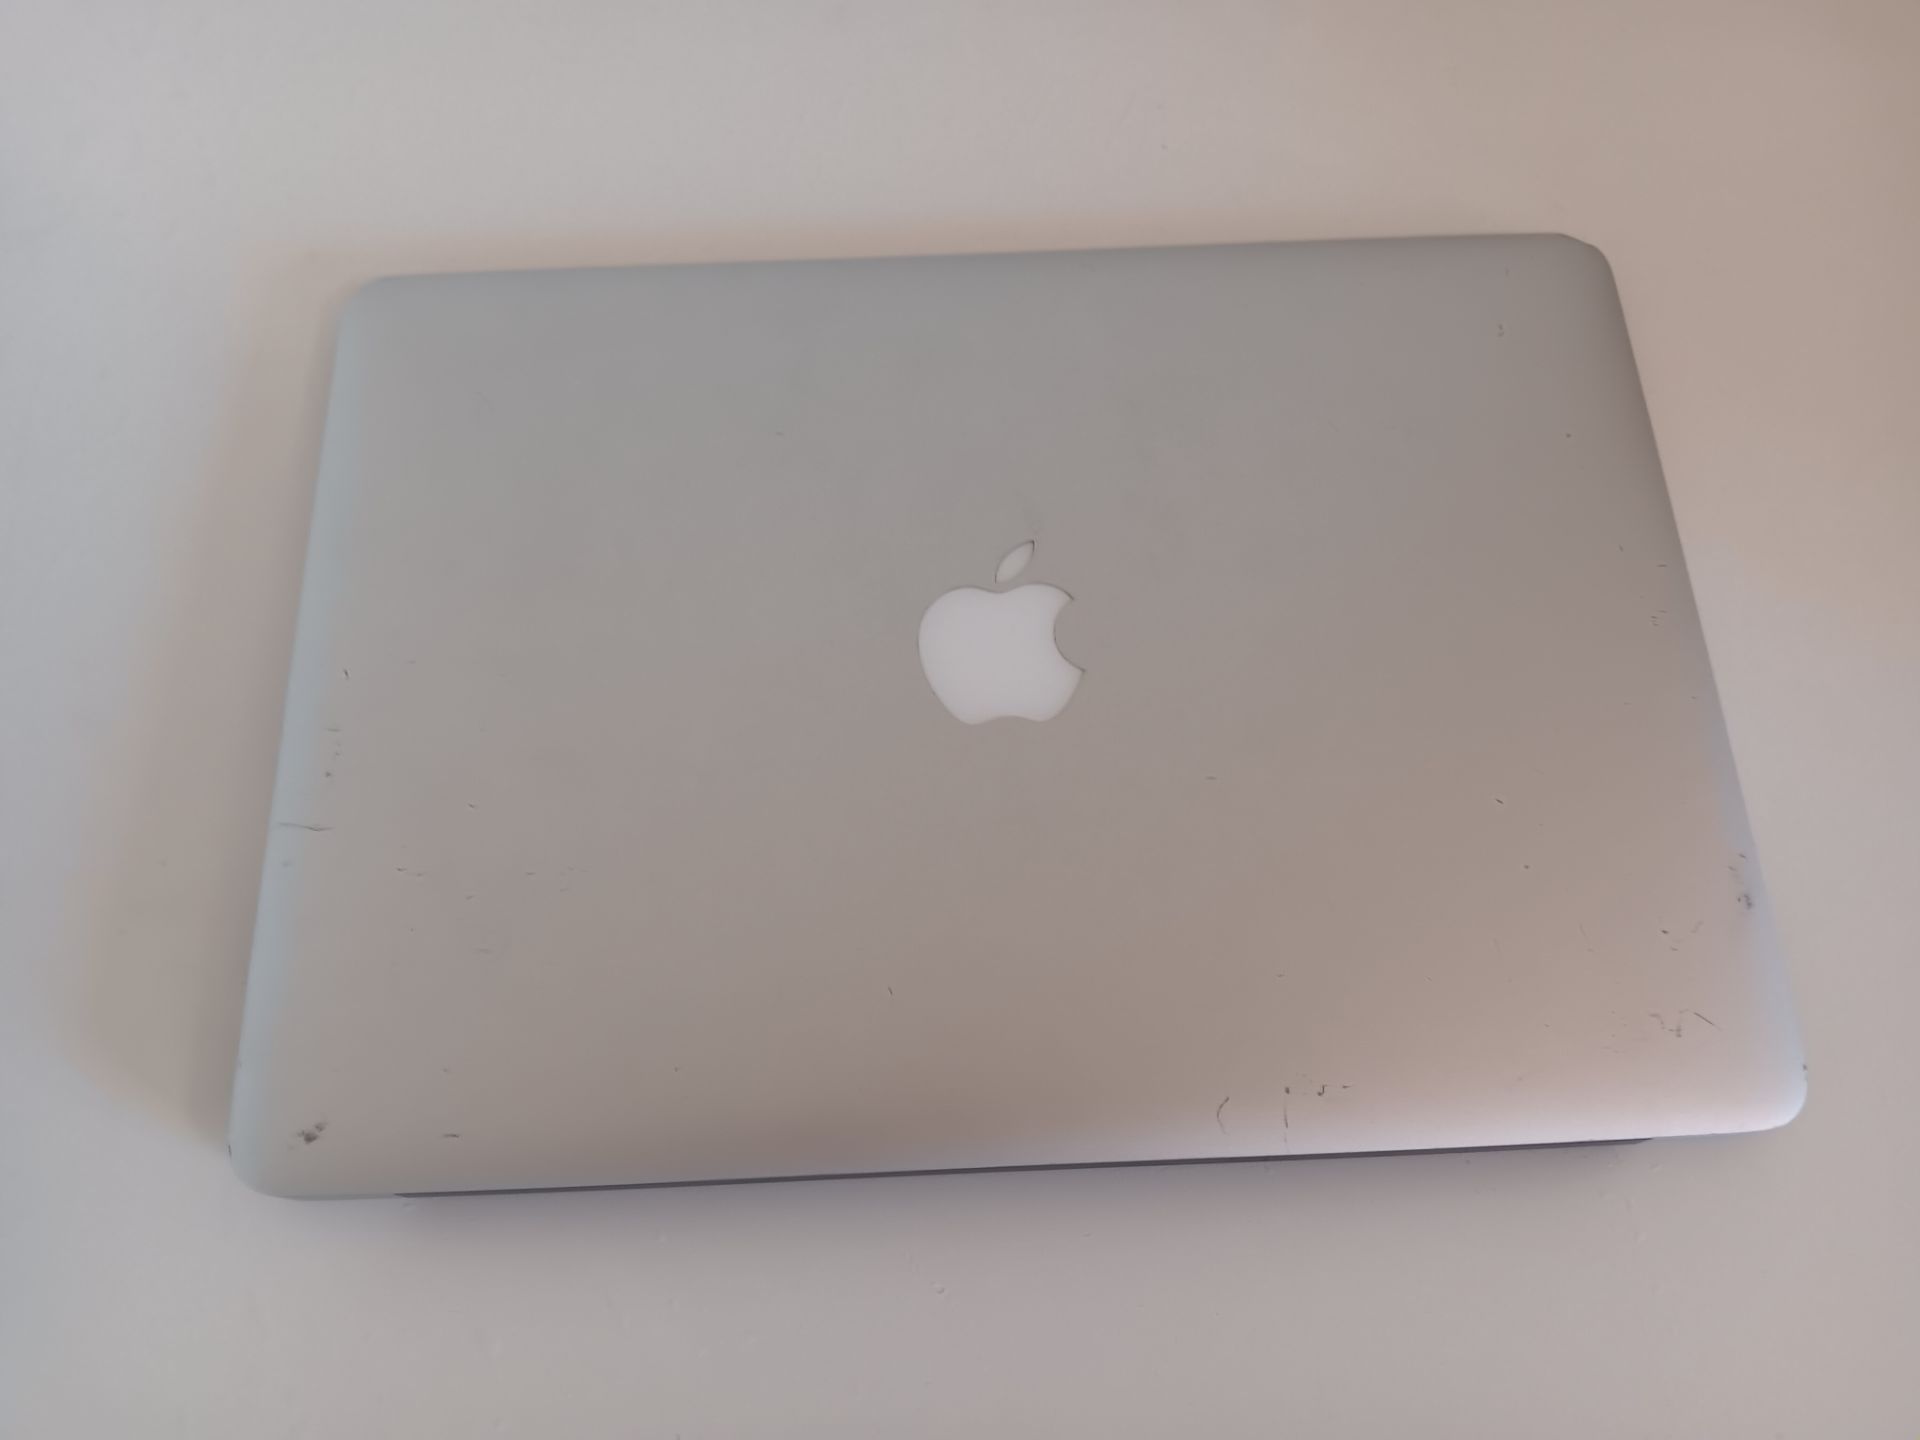 Apple MacBook Air i5 – 1.3GHZ Processor, 4GB Ram & 120GB Hard Drive (Needs Bios Battery & No - Image 2 of 4